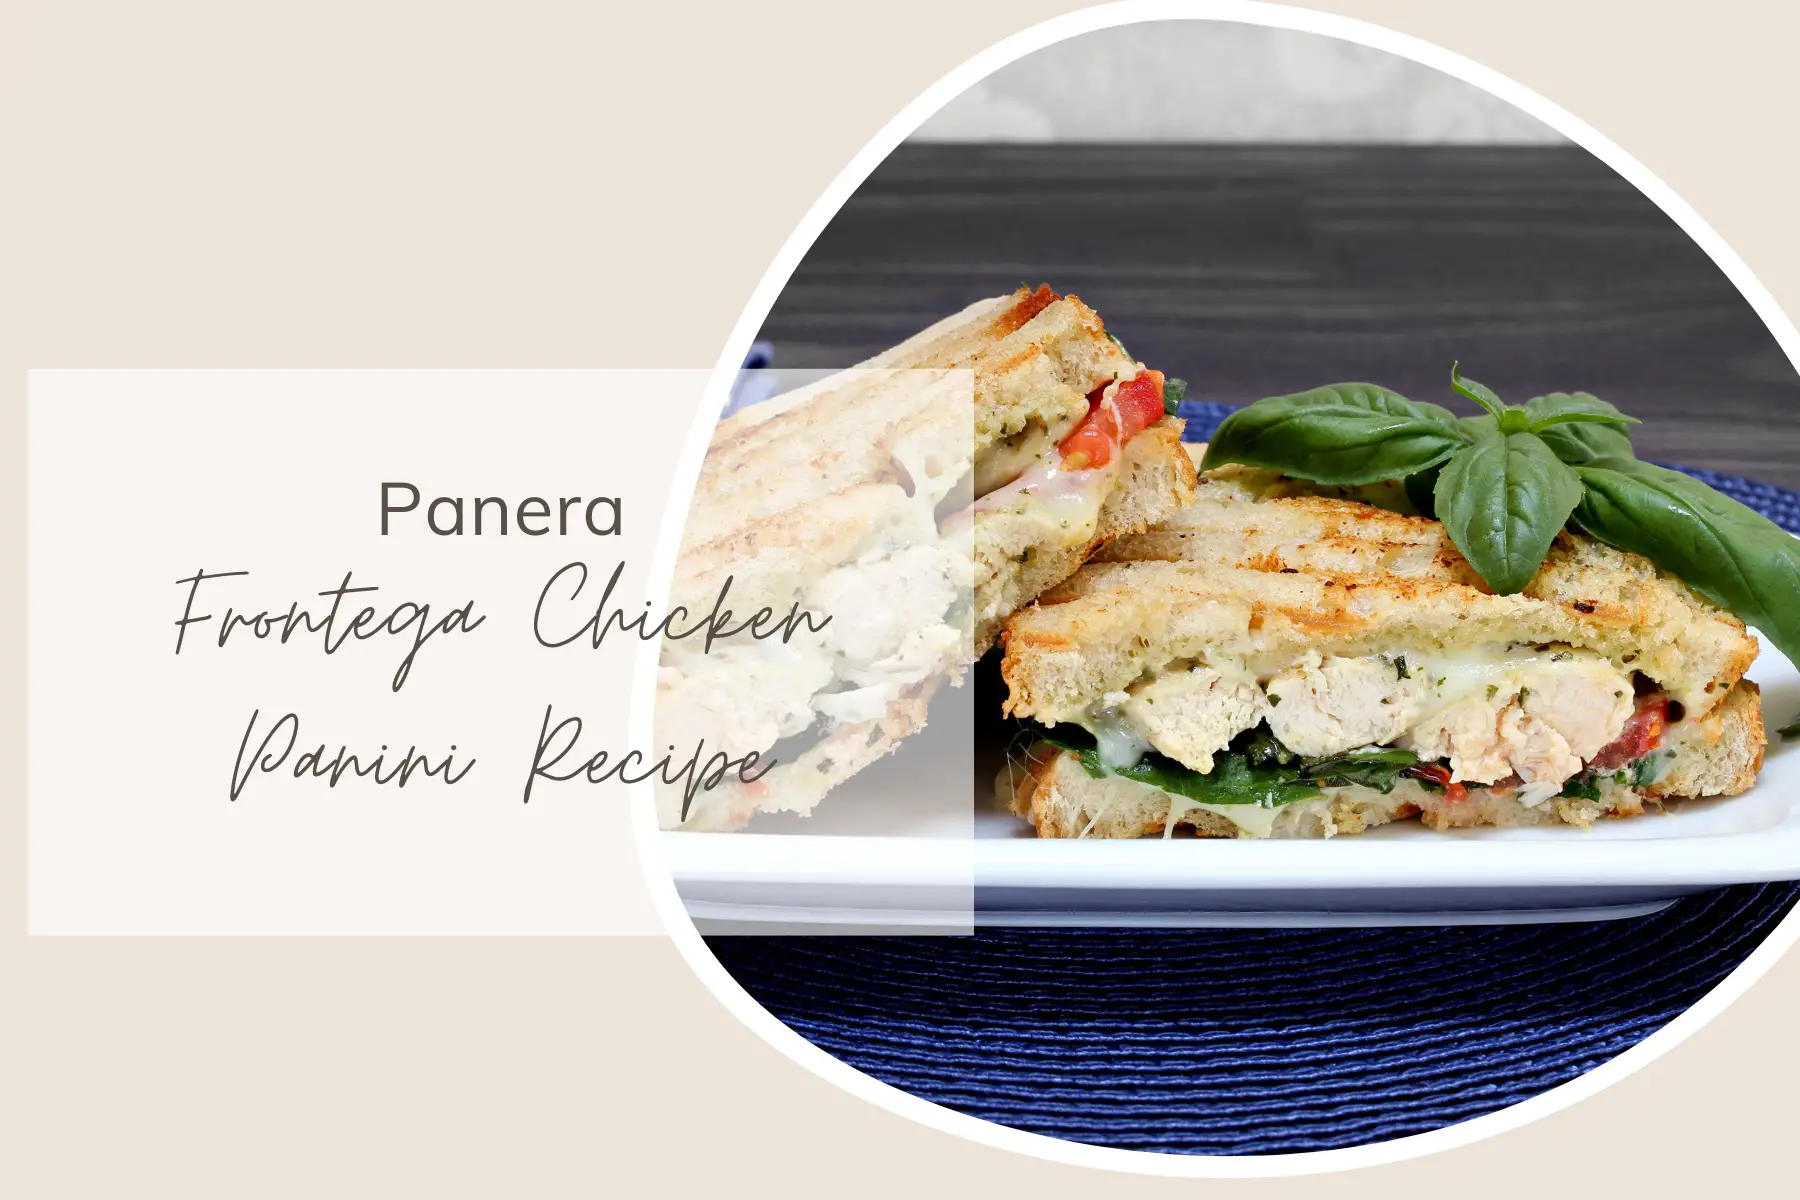 Panera Frontega Chicken Panini Recipe